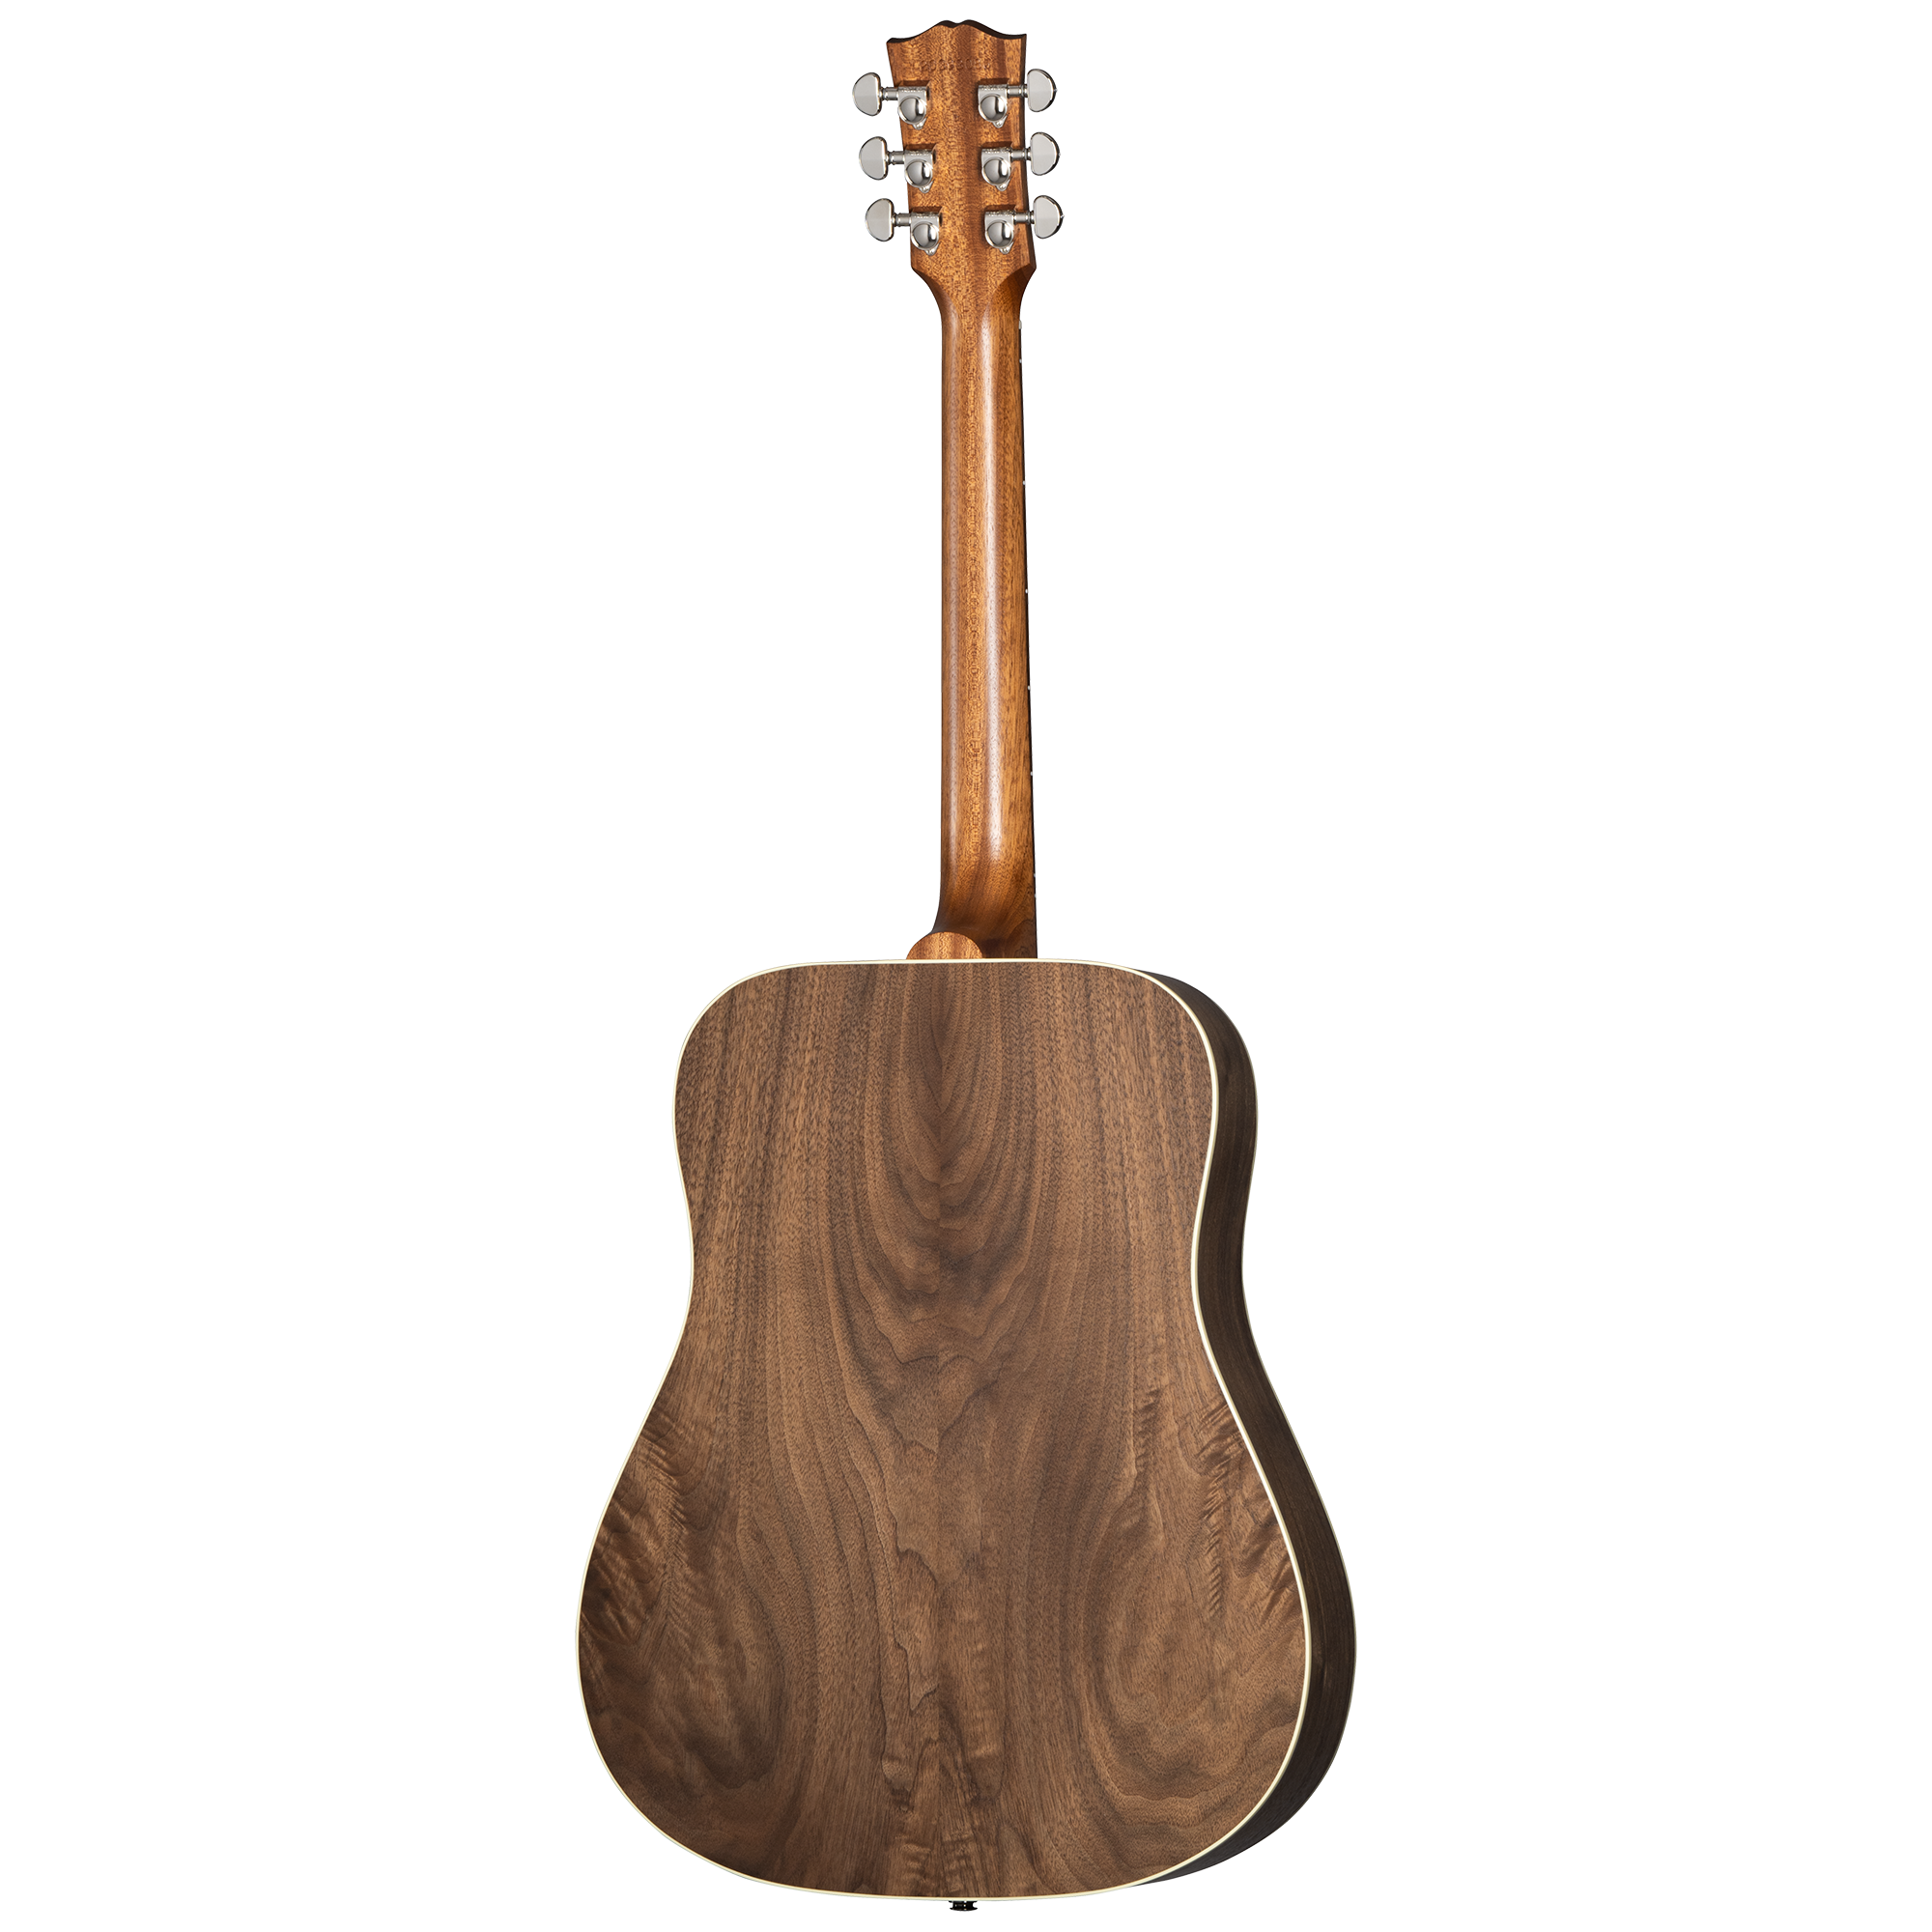 Gibson Hummingbird Studio Walnut Acoustic-electric Guitar - Vintage Sunburst